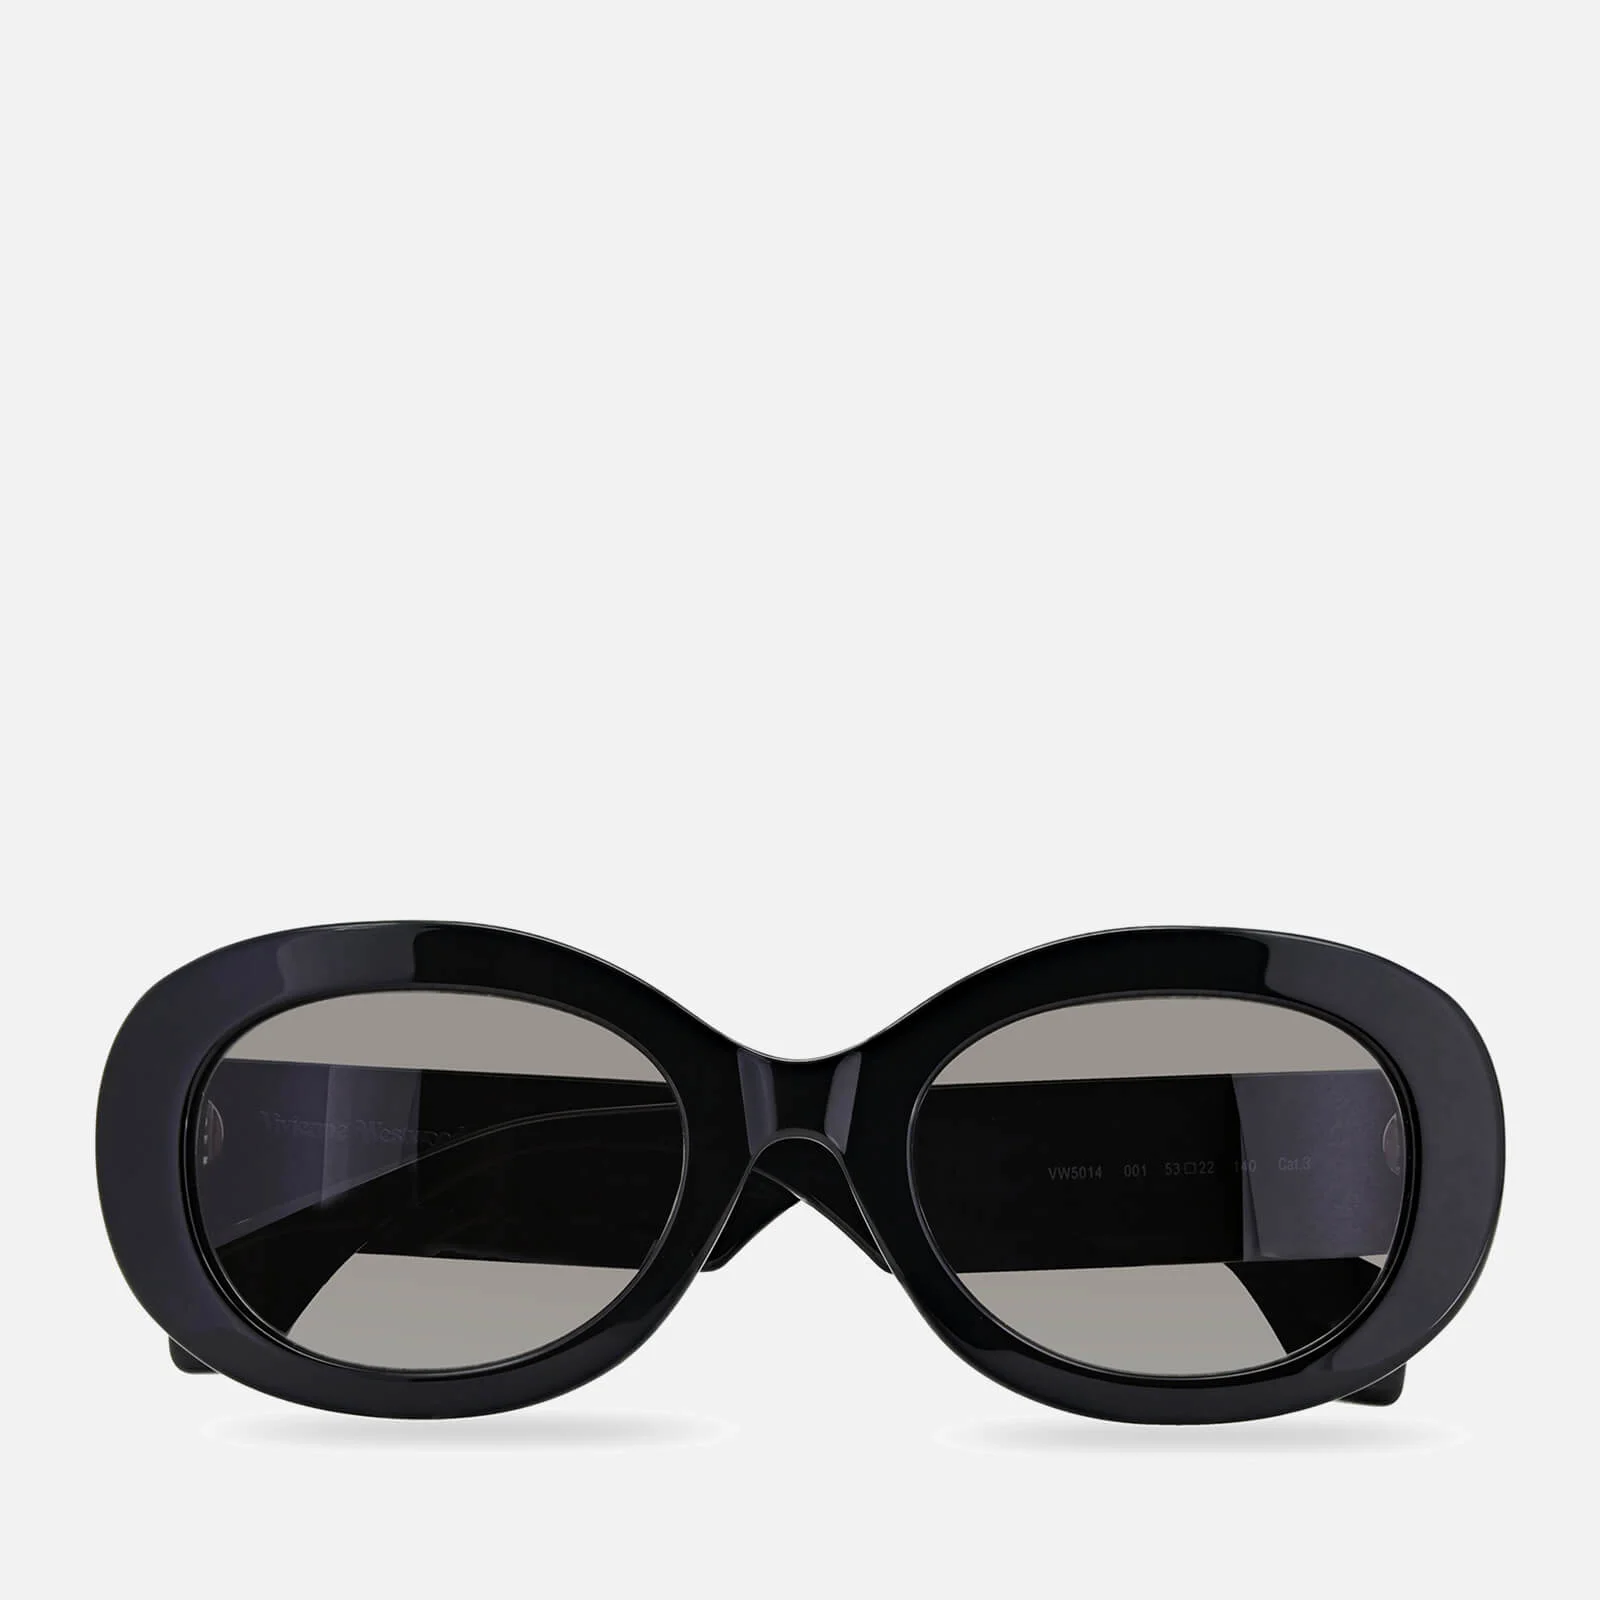 Vivienne Westwood Women's Round Acetate Sunglasses - Black Image 1